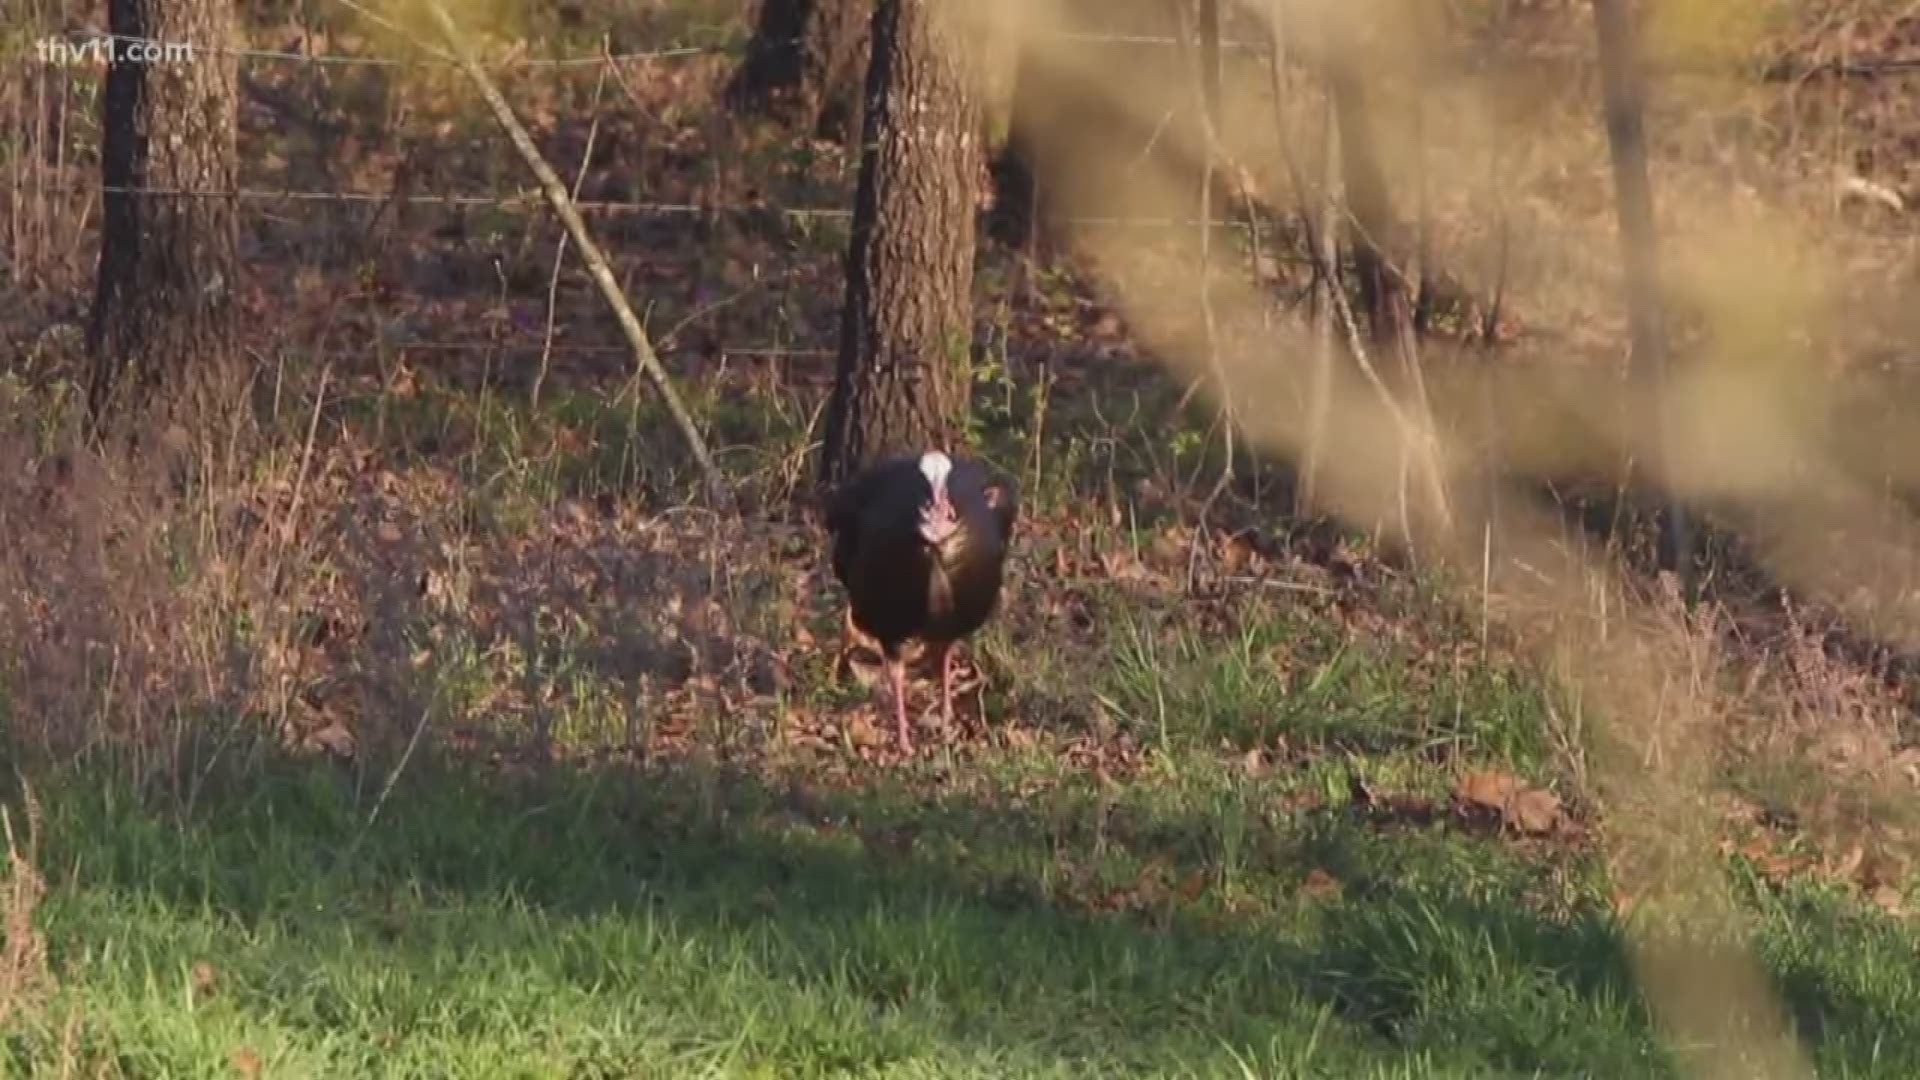 Turkey hunting season just days away